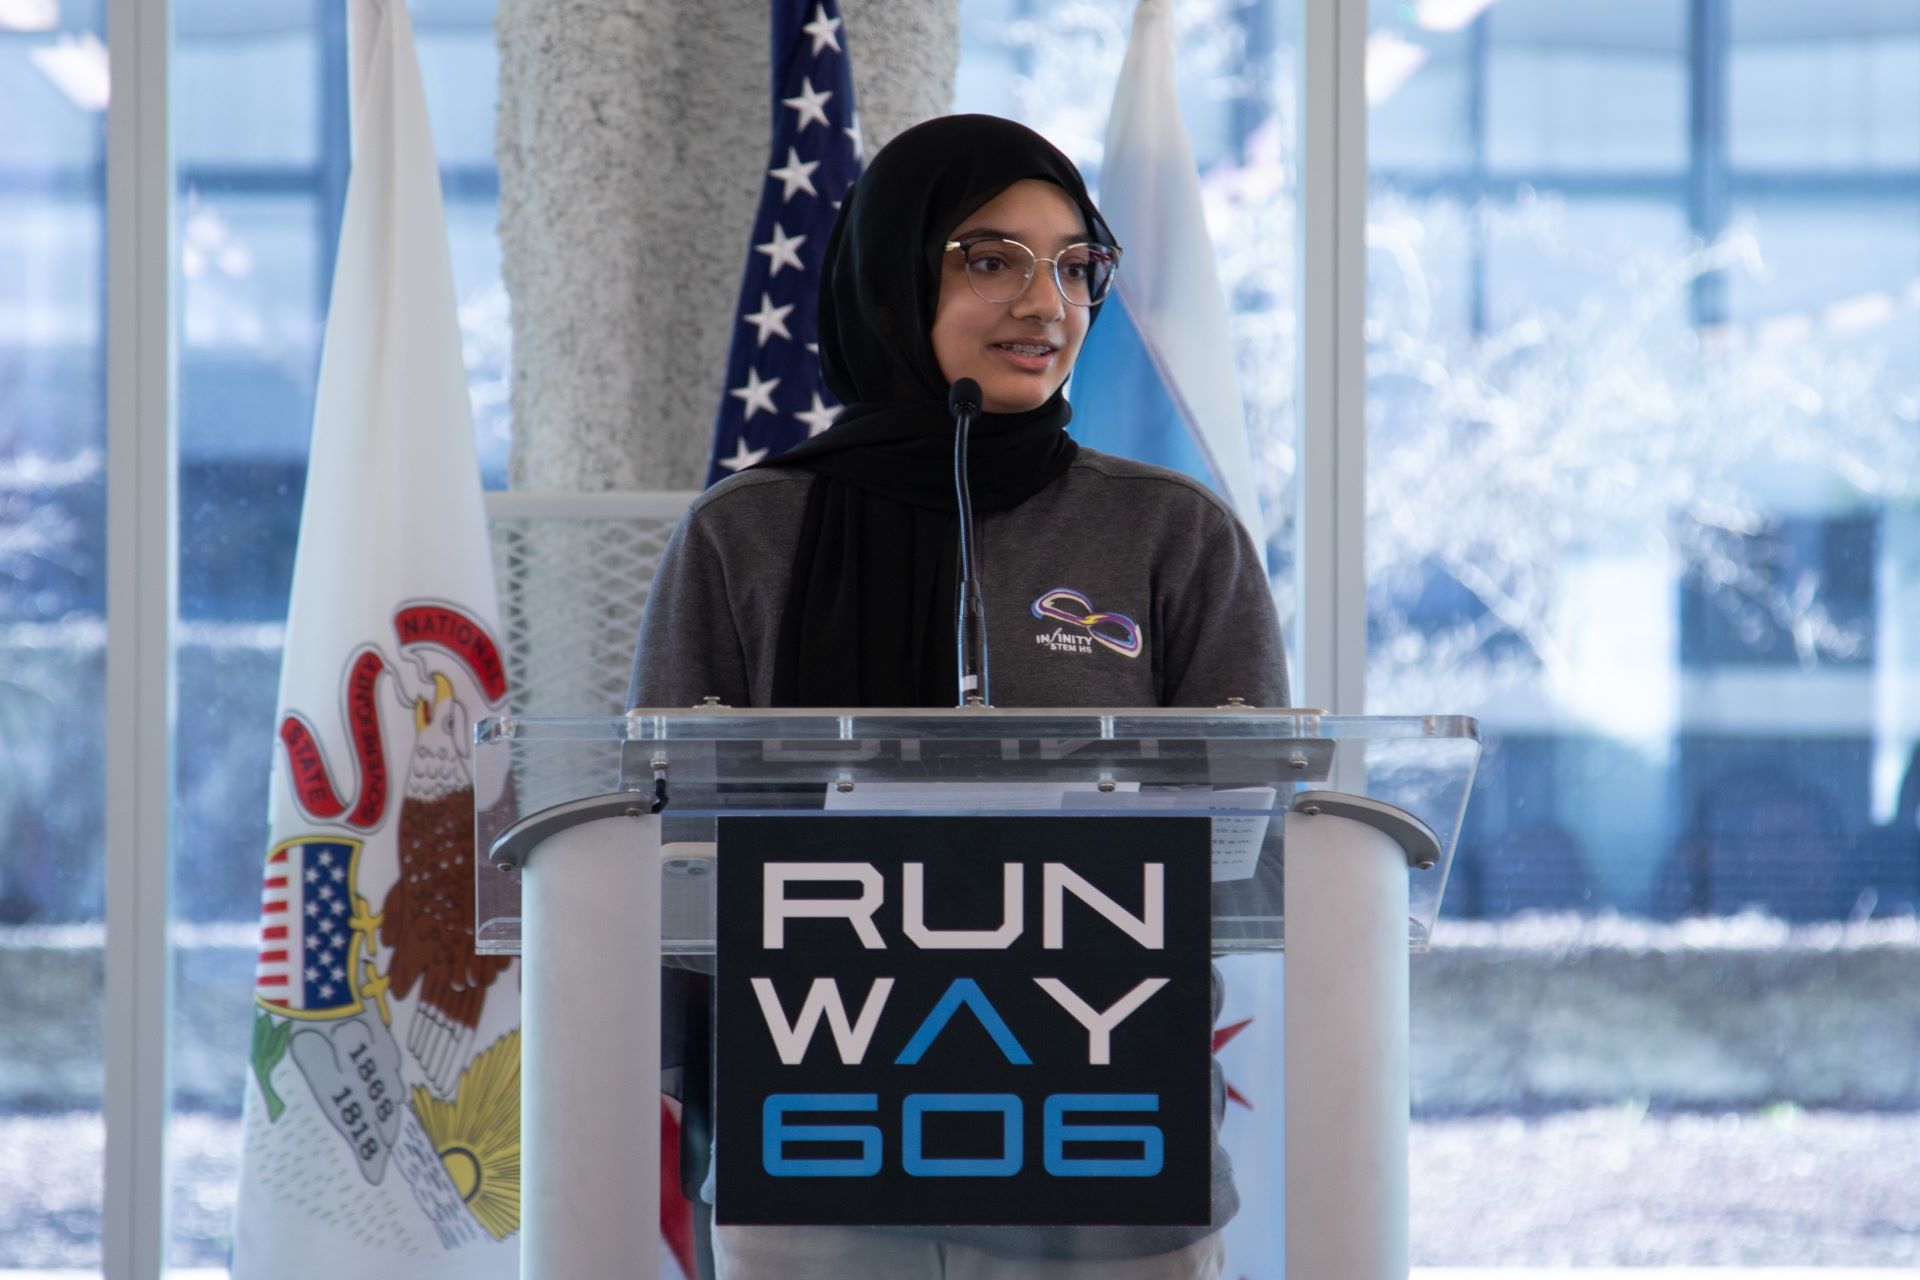 Fatima speaking at a Runway 606 event